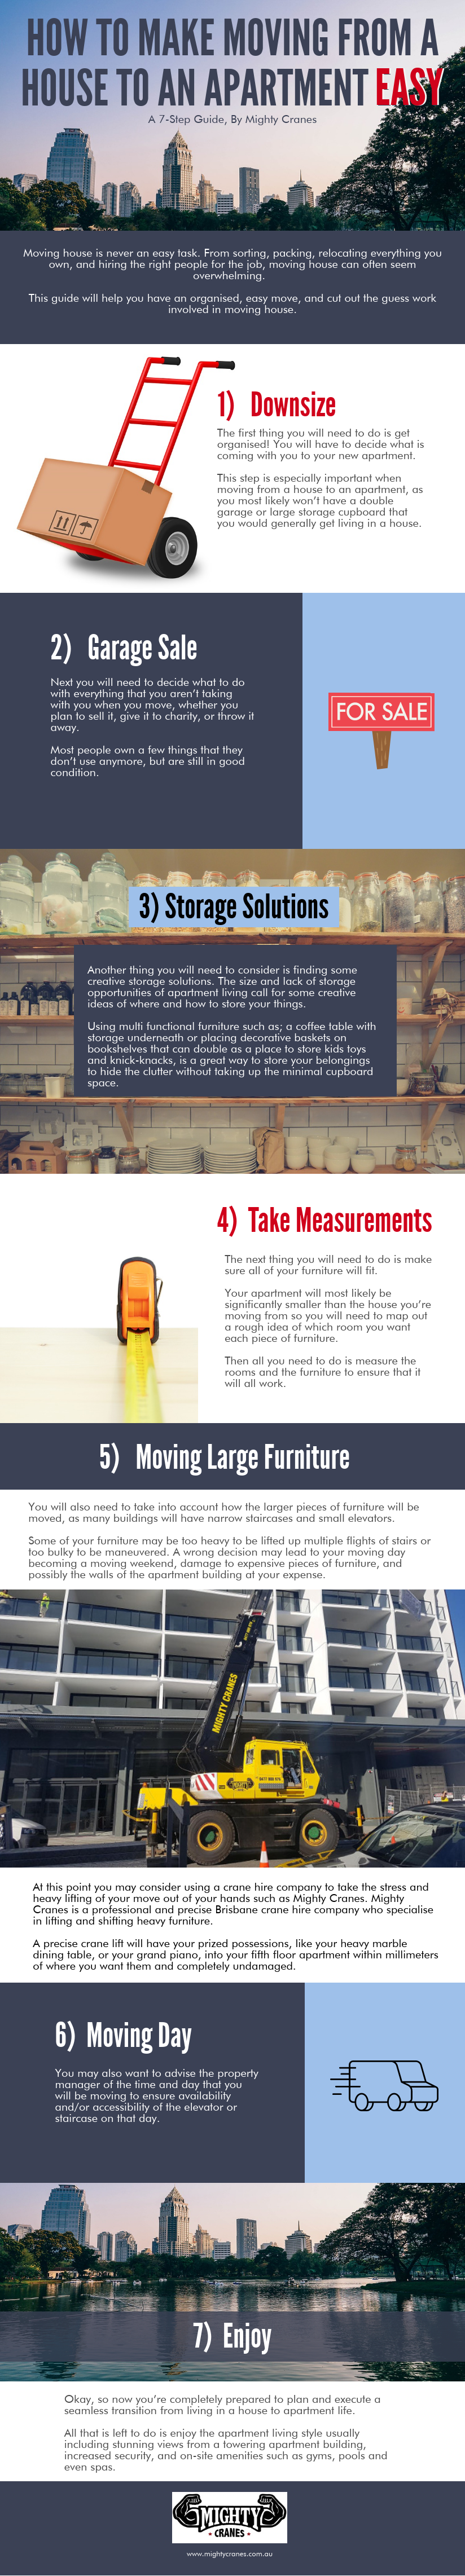 Moving oversized furniture